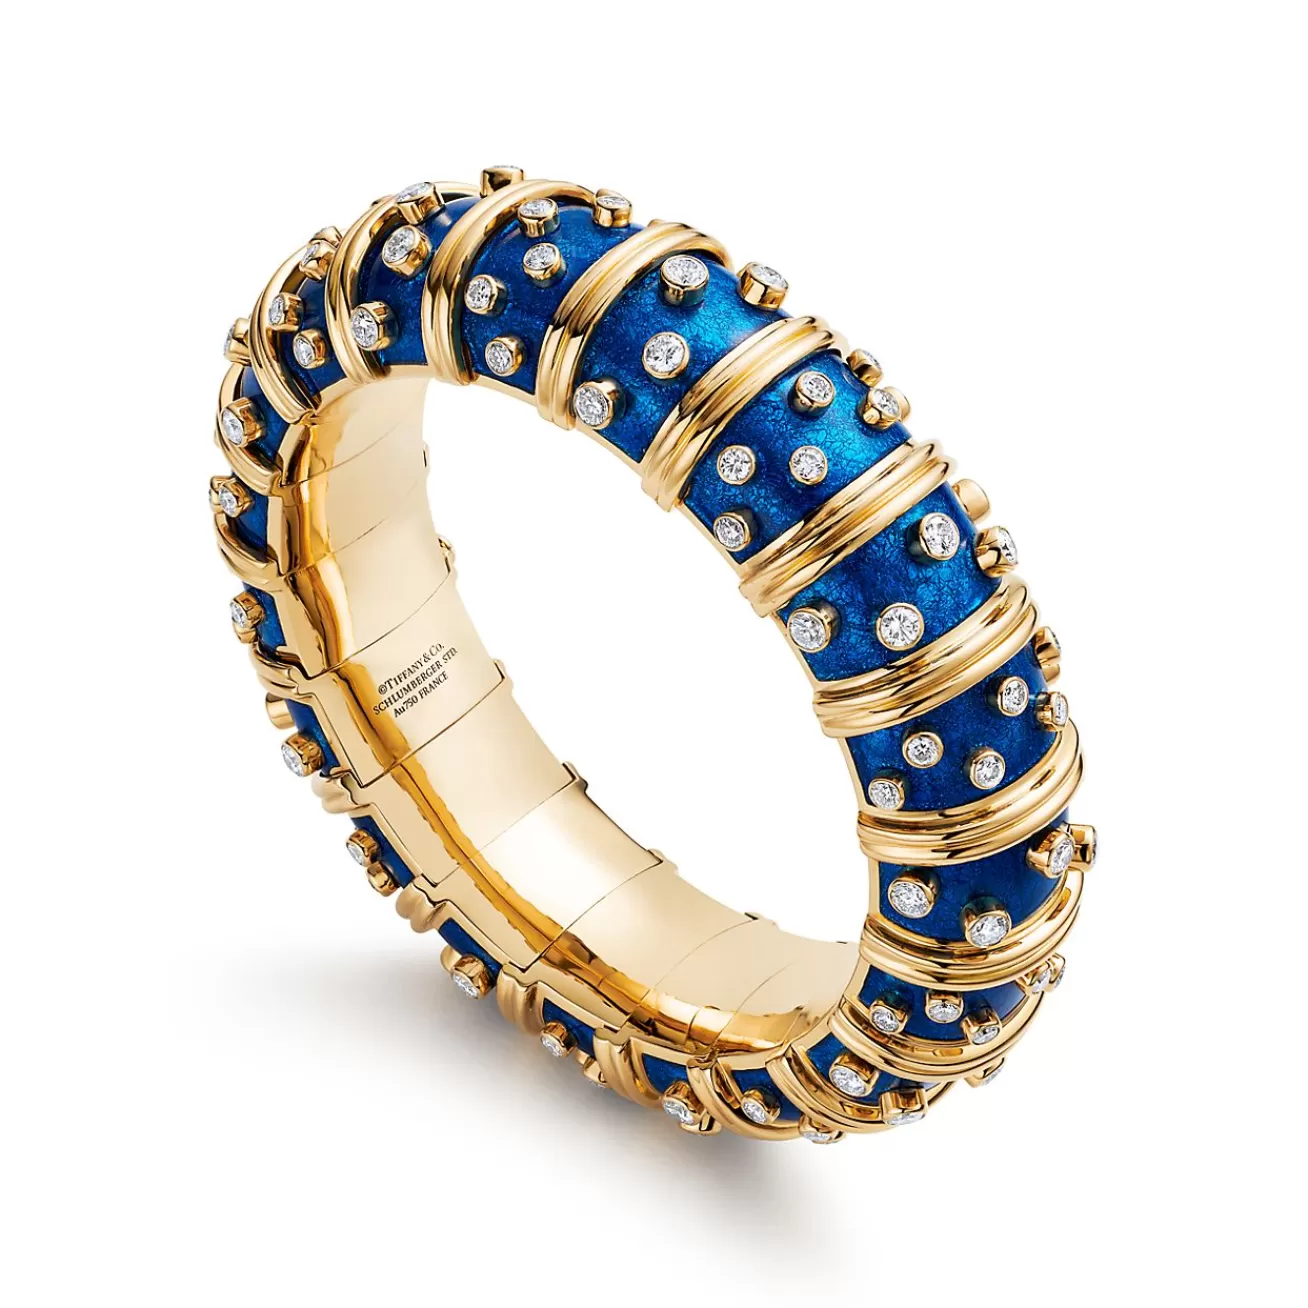 Tiffany & Co. Bracelet in Yellow Gold with Light Blue Enamel and Diamonds | ^ Bracelets | Gold Jewelry